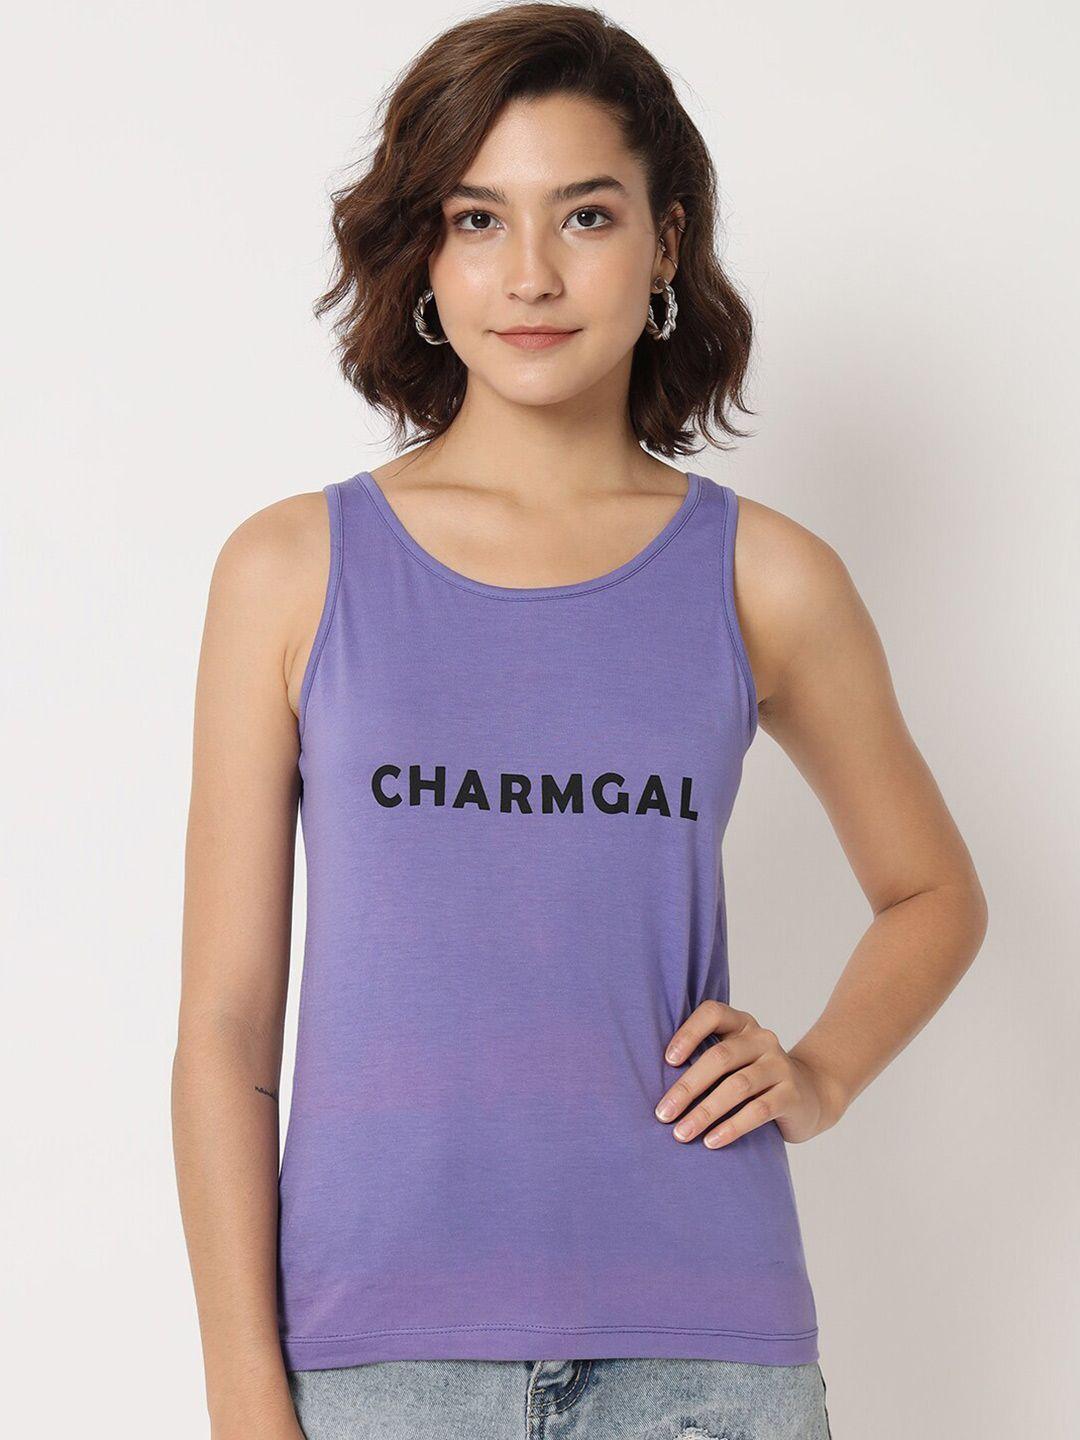 charmgal purple print cotton tank top